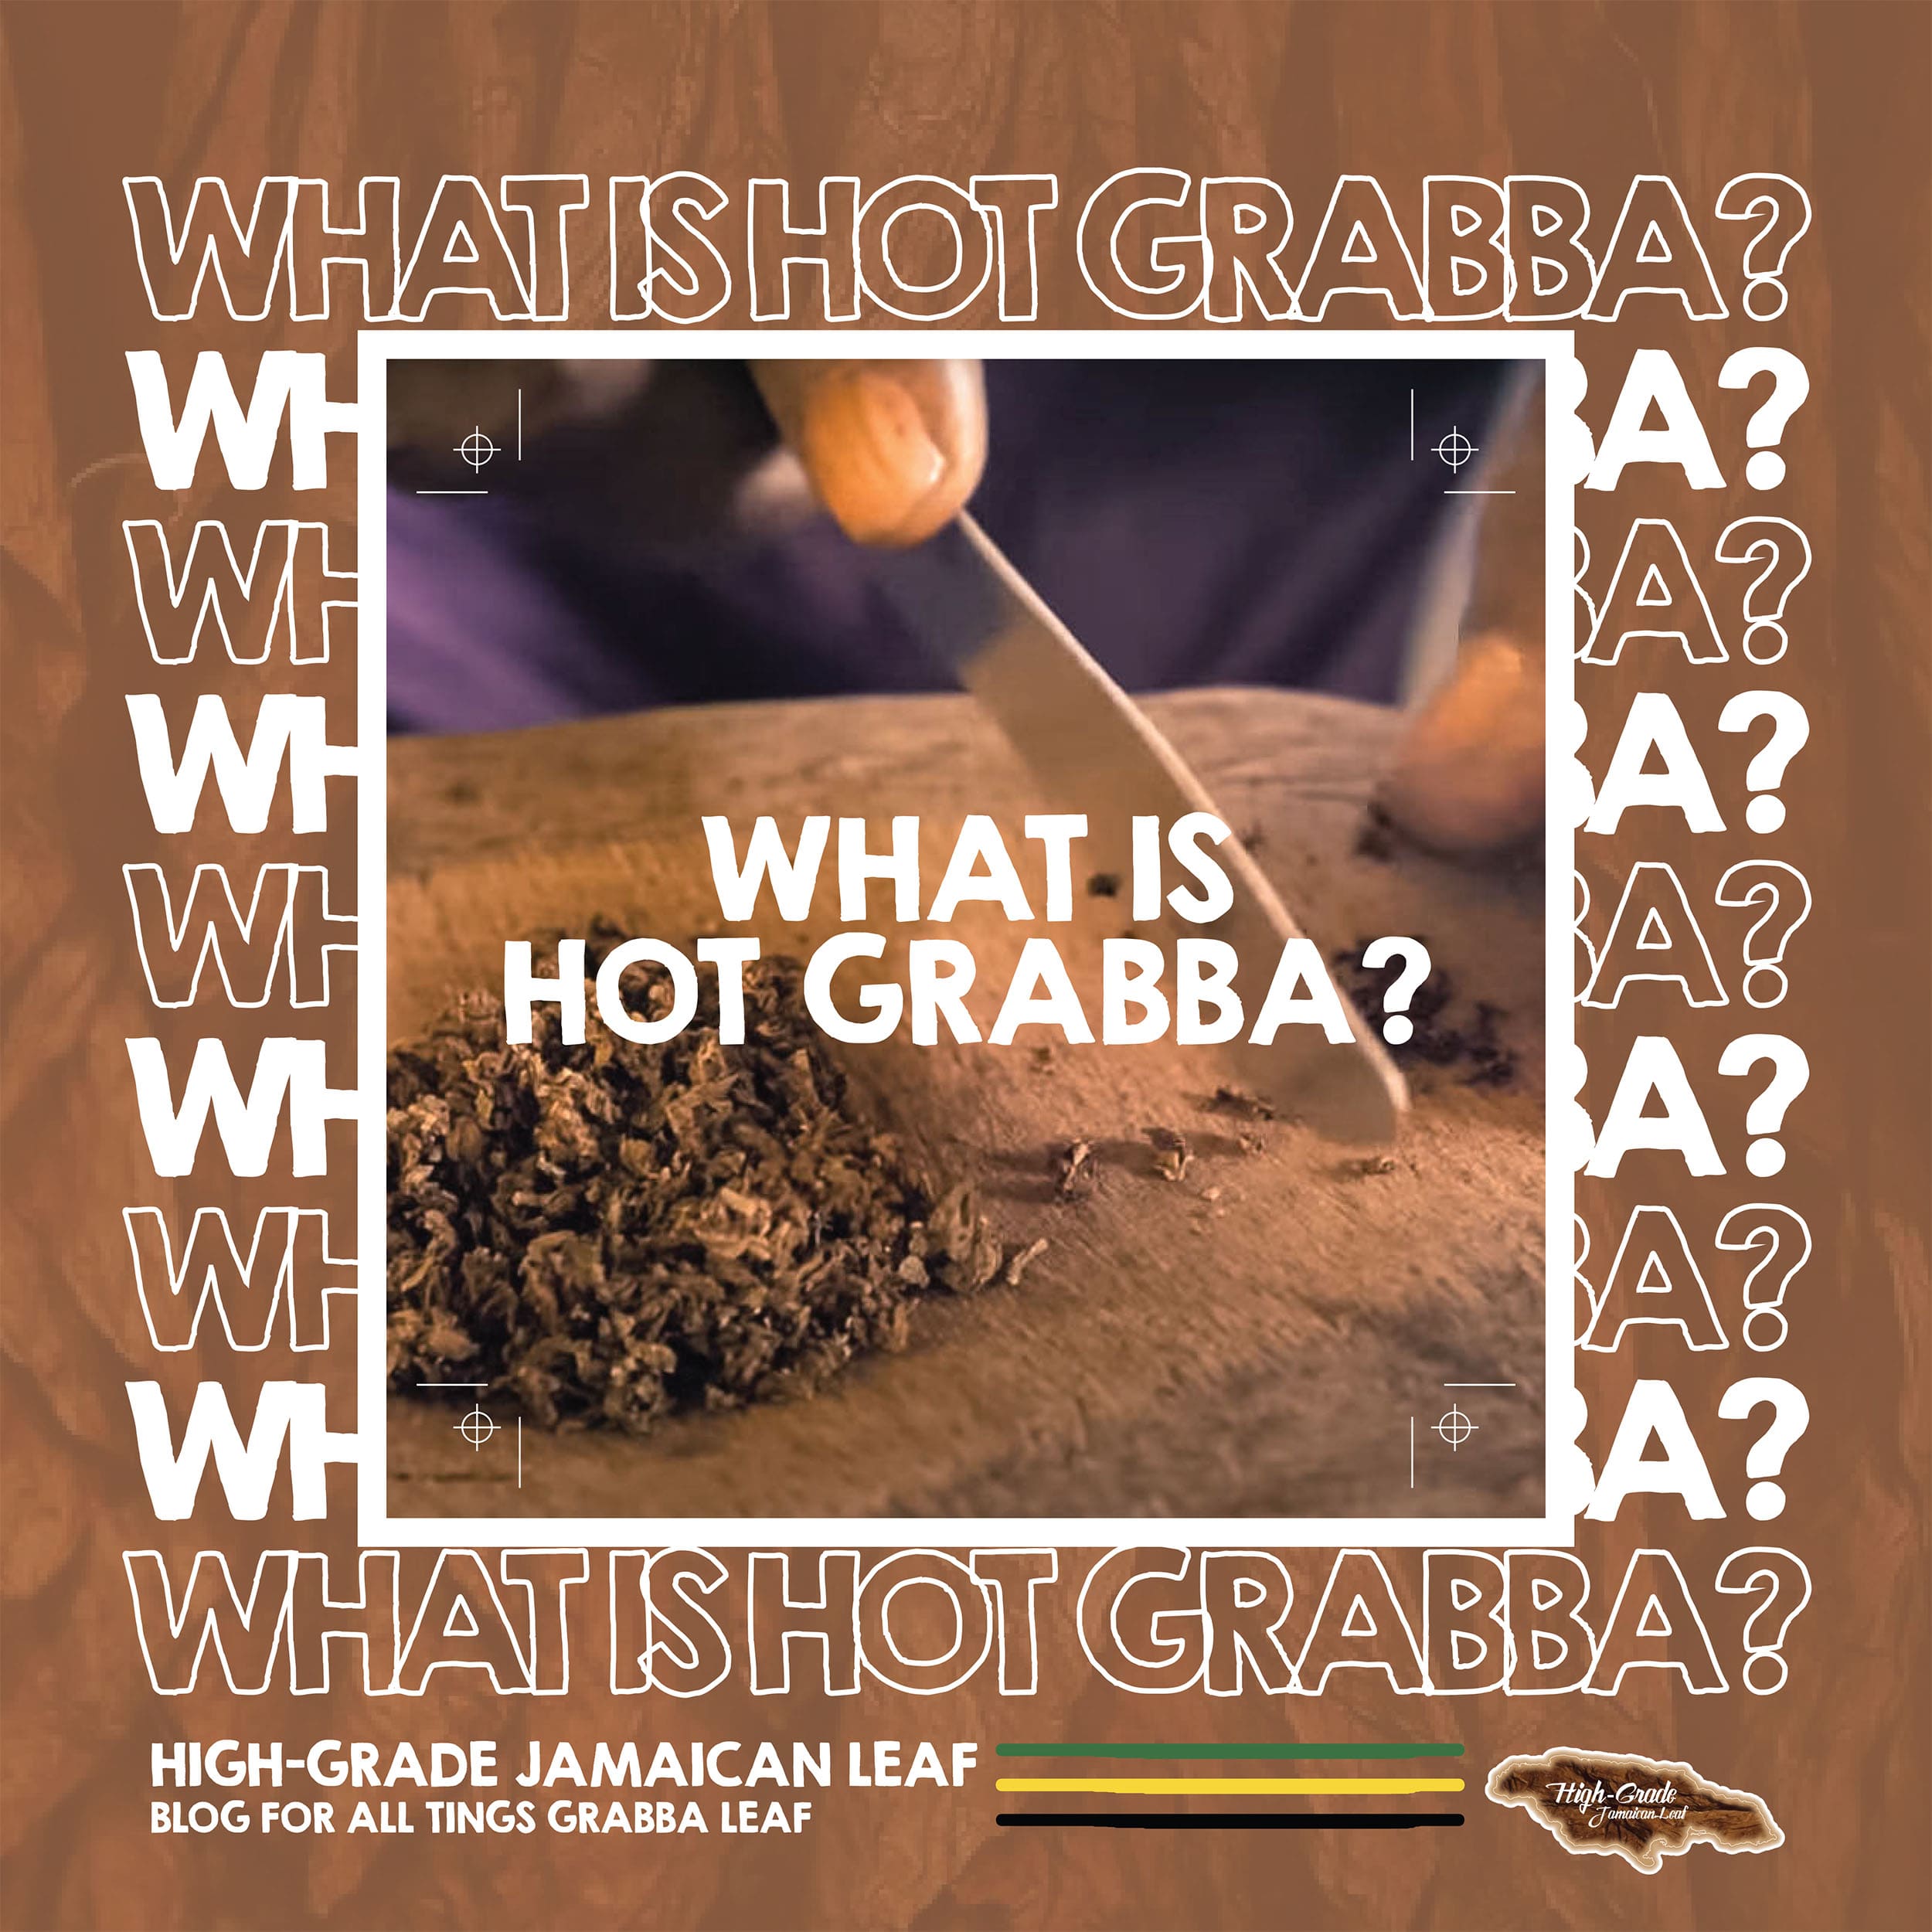 What Is Grabba Leaf? - Hotgrabbz™ Grabba